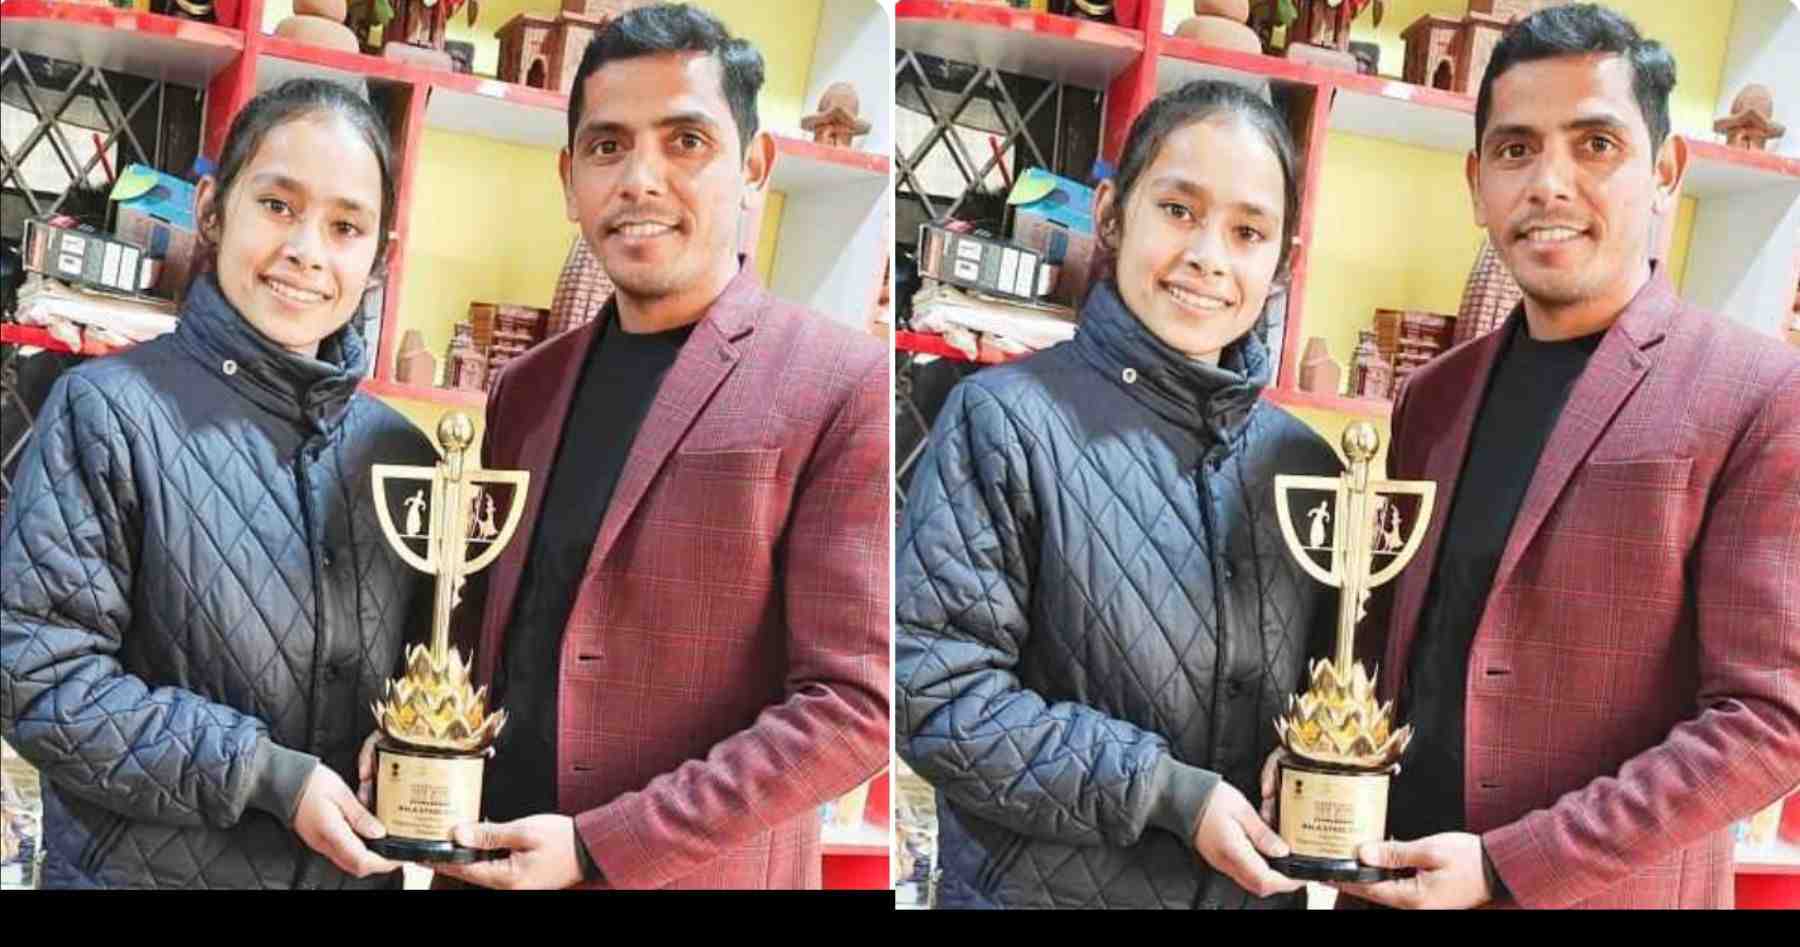 Uttarakhand news: Harish Dafouti and Manisha Rawal of Bageshwar will be seen on Rajpath, honored on republic day. Harish Dafouti Manisha Rawal Bageshwar